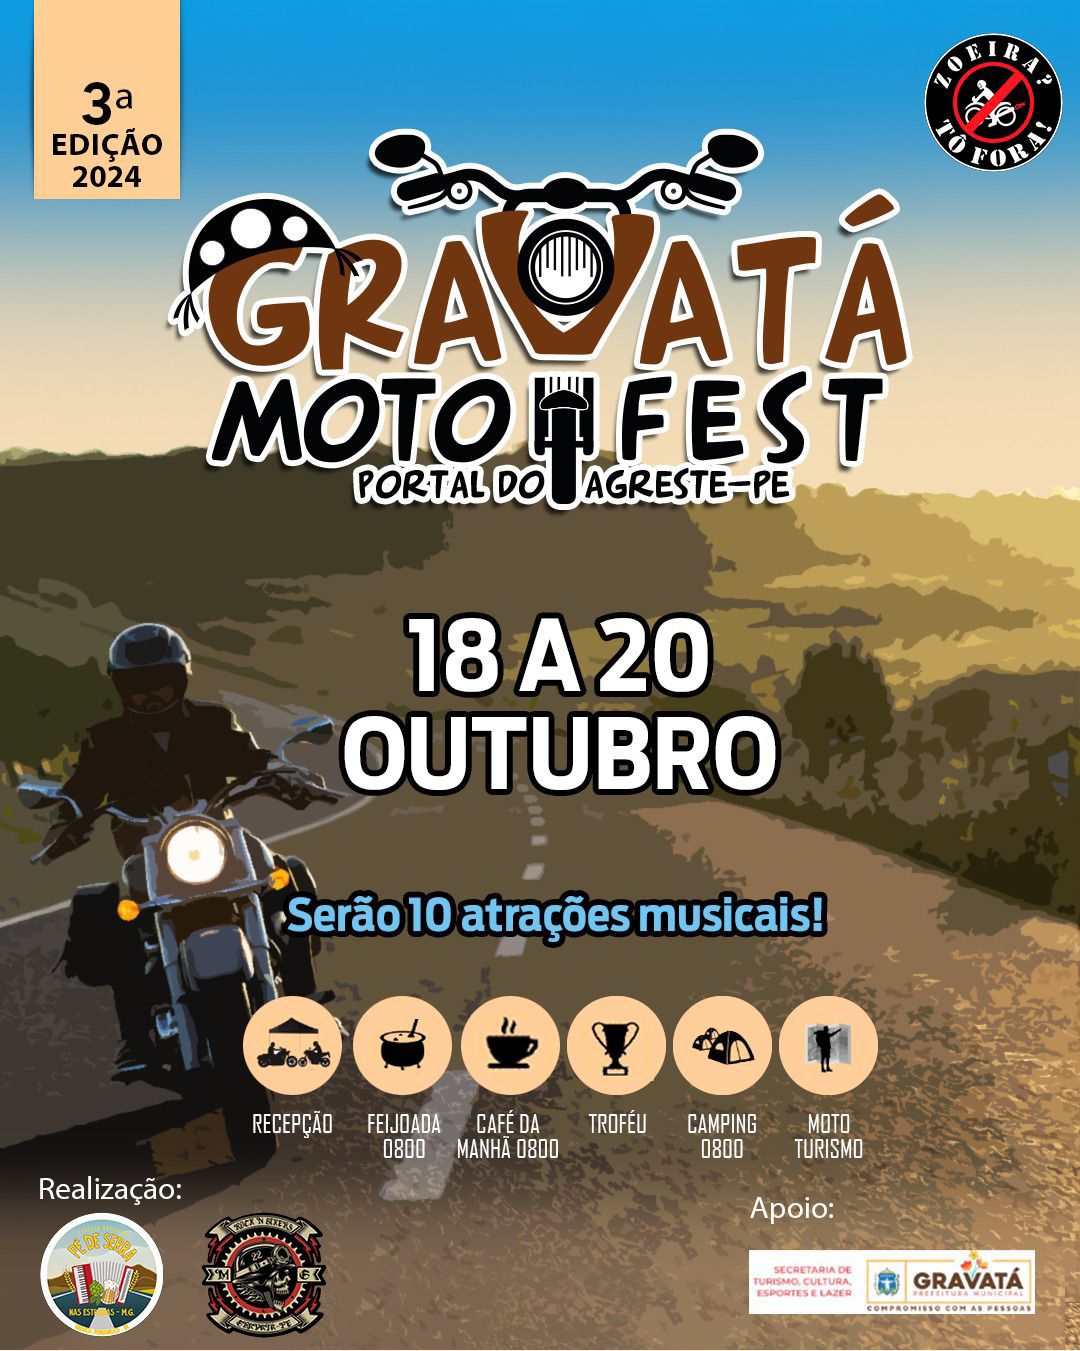 Gravatá Moto Fest data 18 a 20 de outubro de 2024